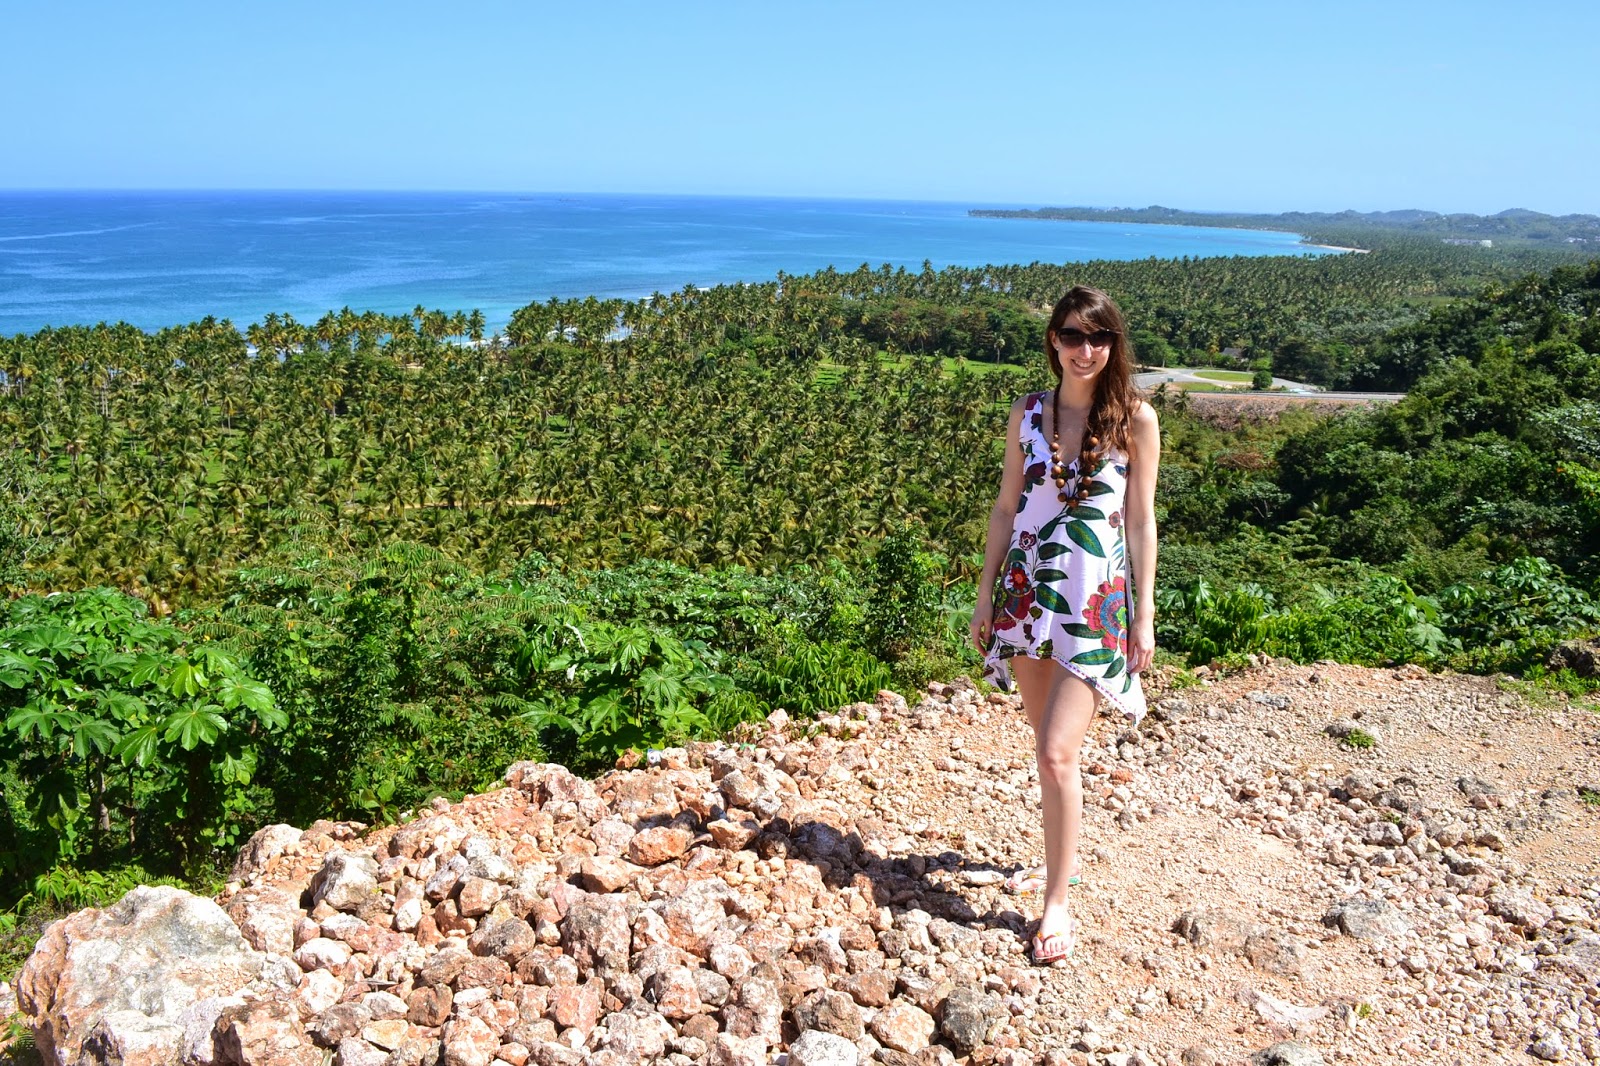 playa coson, samana, republica dominicana, blog de viajes